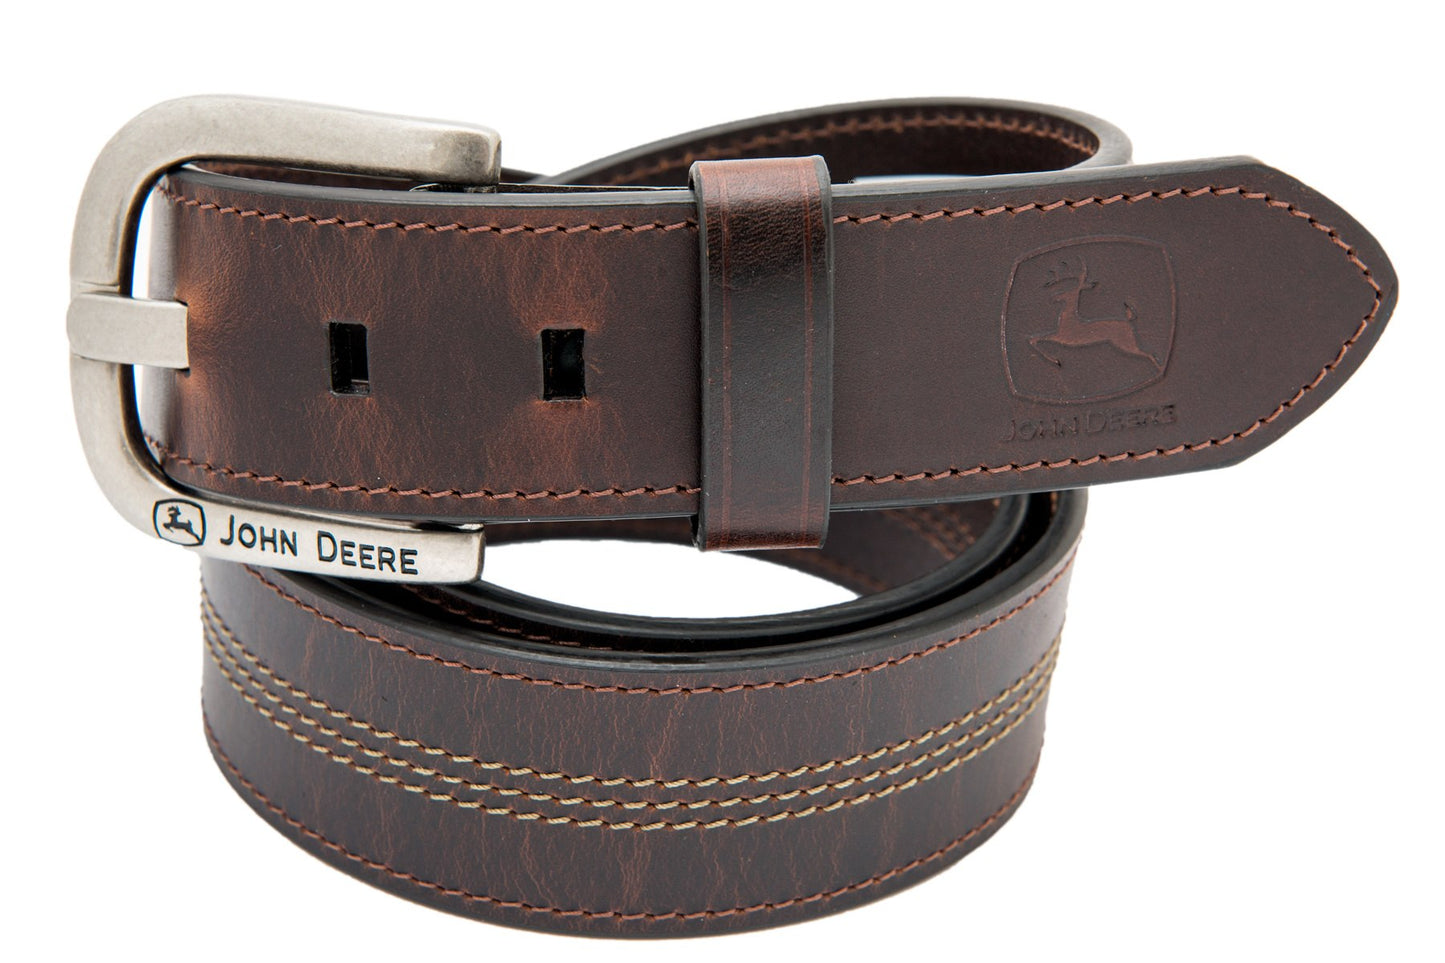 John Deere Oil Tanned Genuine Leather Belt - Brown - 4503500-200